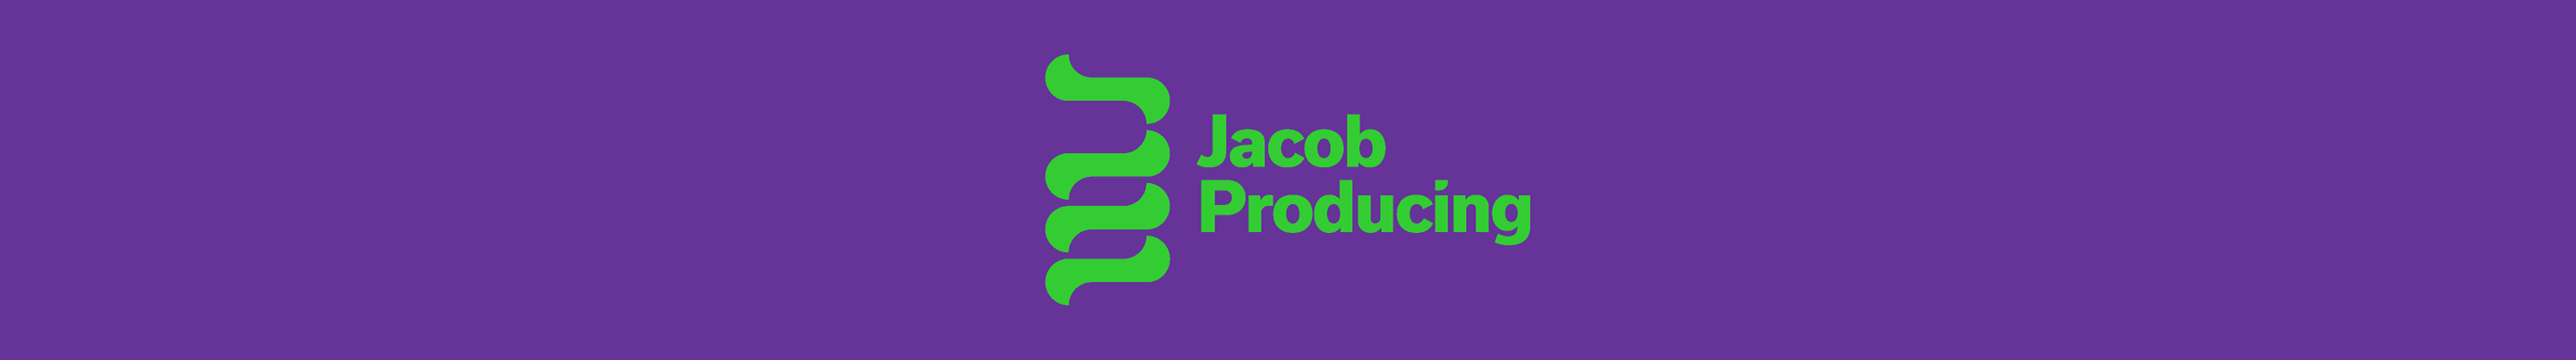 Jacob Schofield のプロファイルバナー